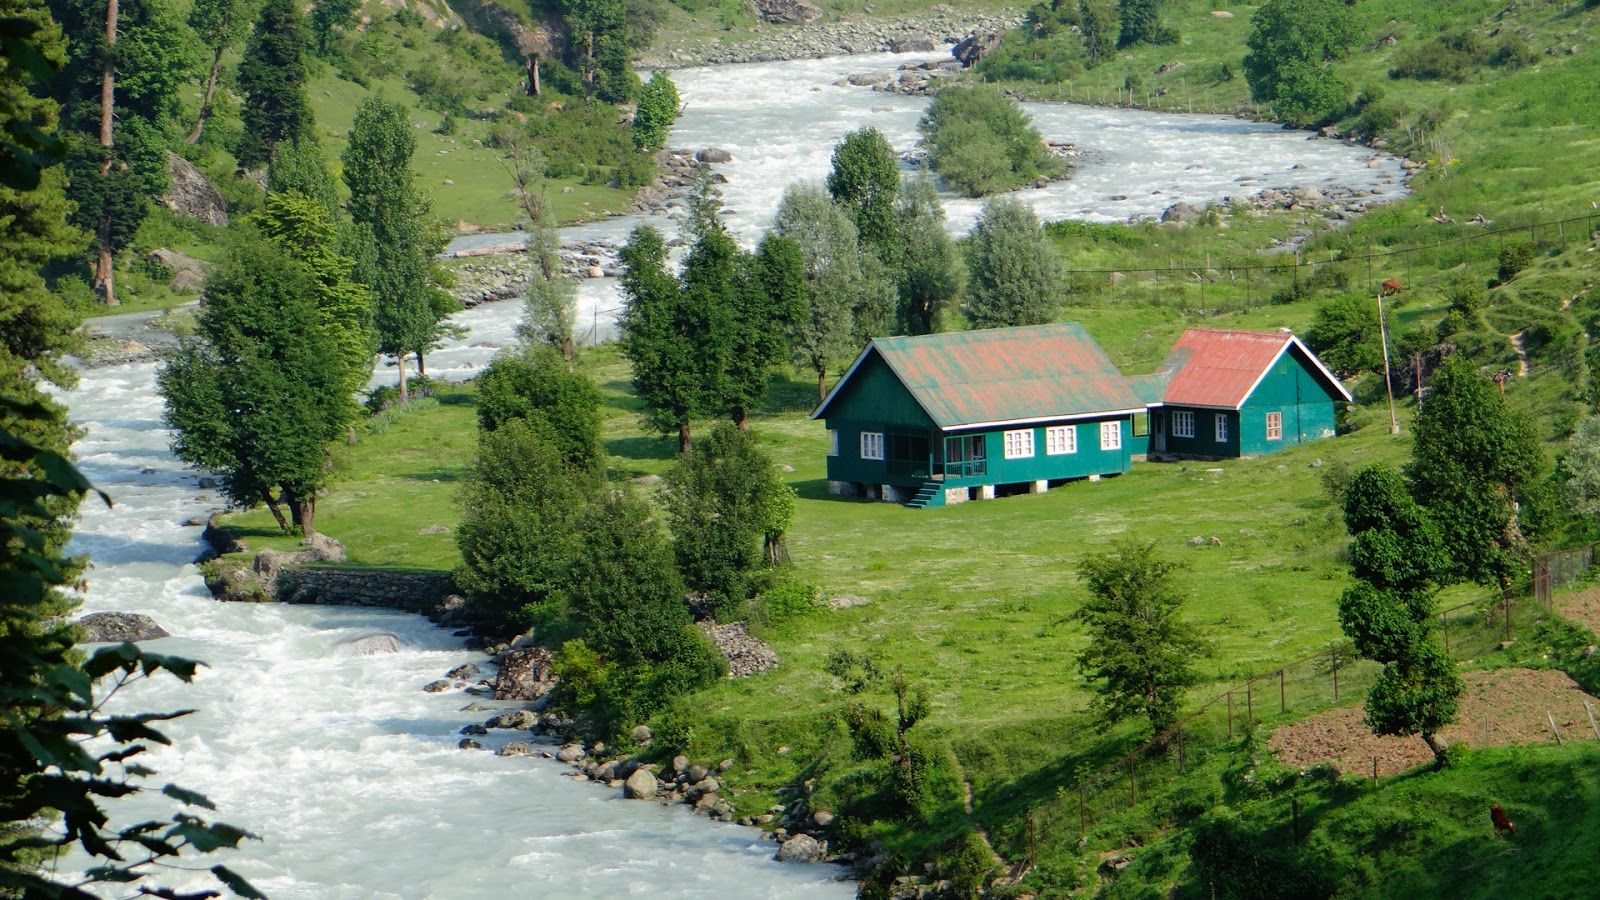 The visual treat ...: Hut on the banks of Lidder river, Aru, Kashmir